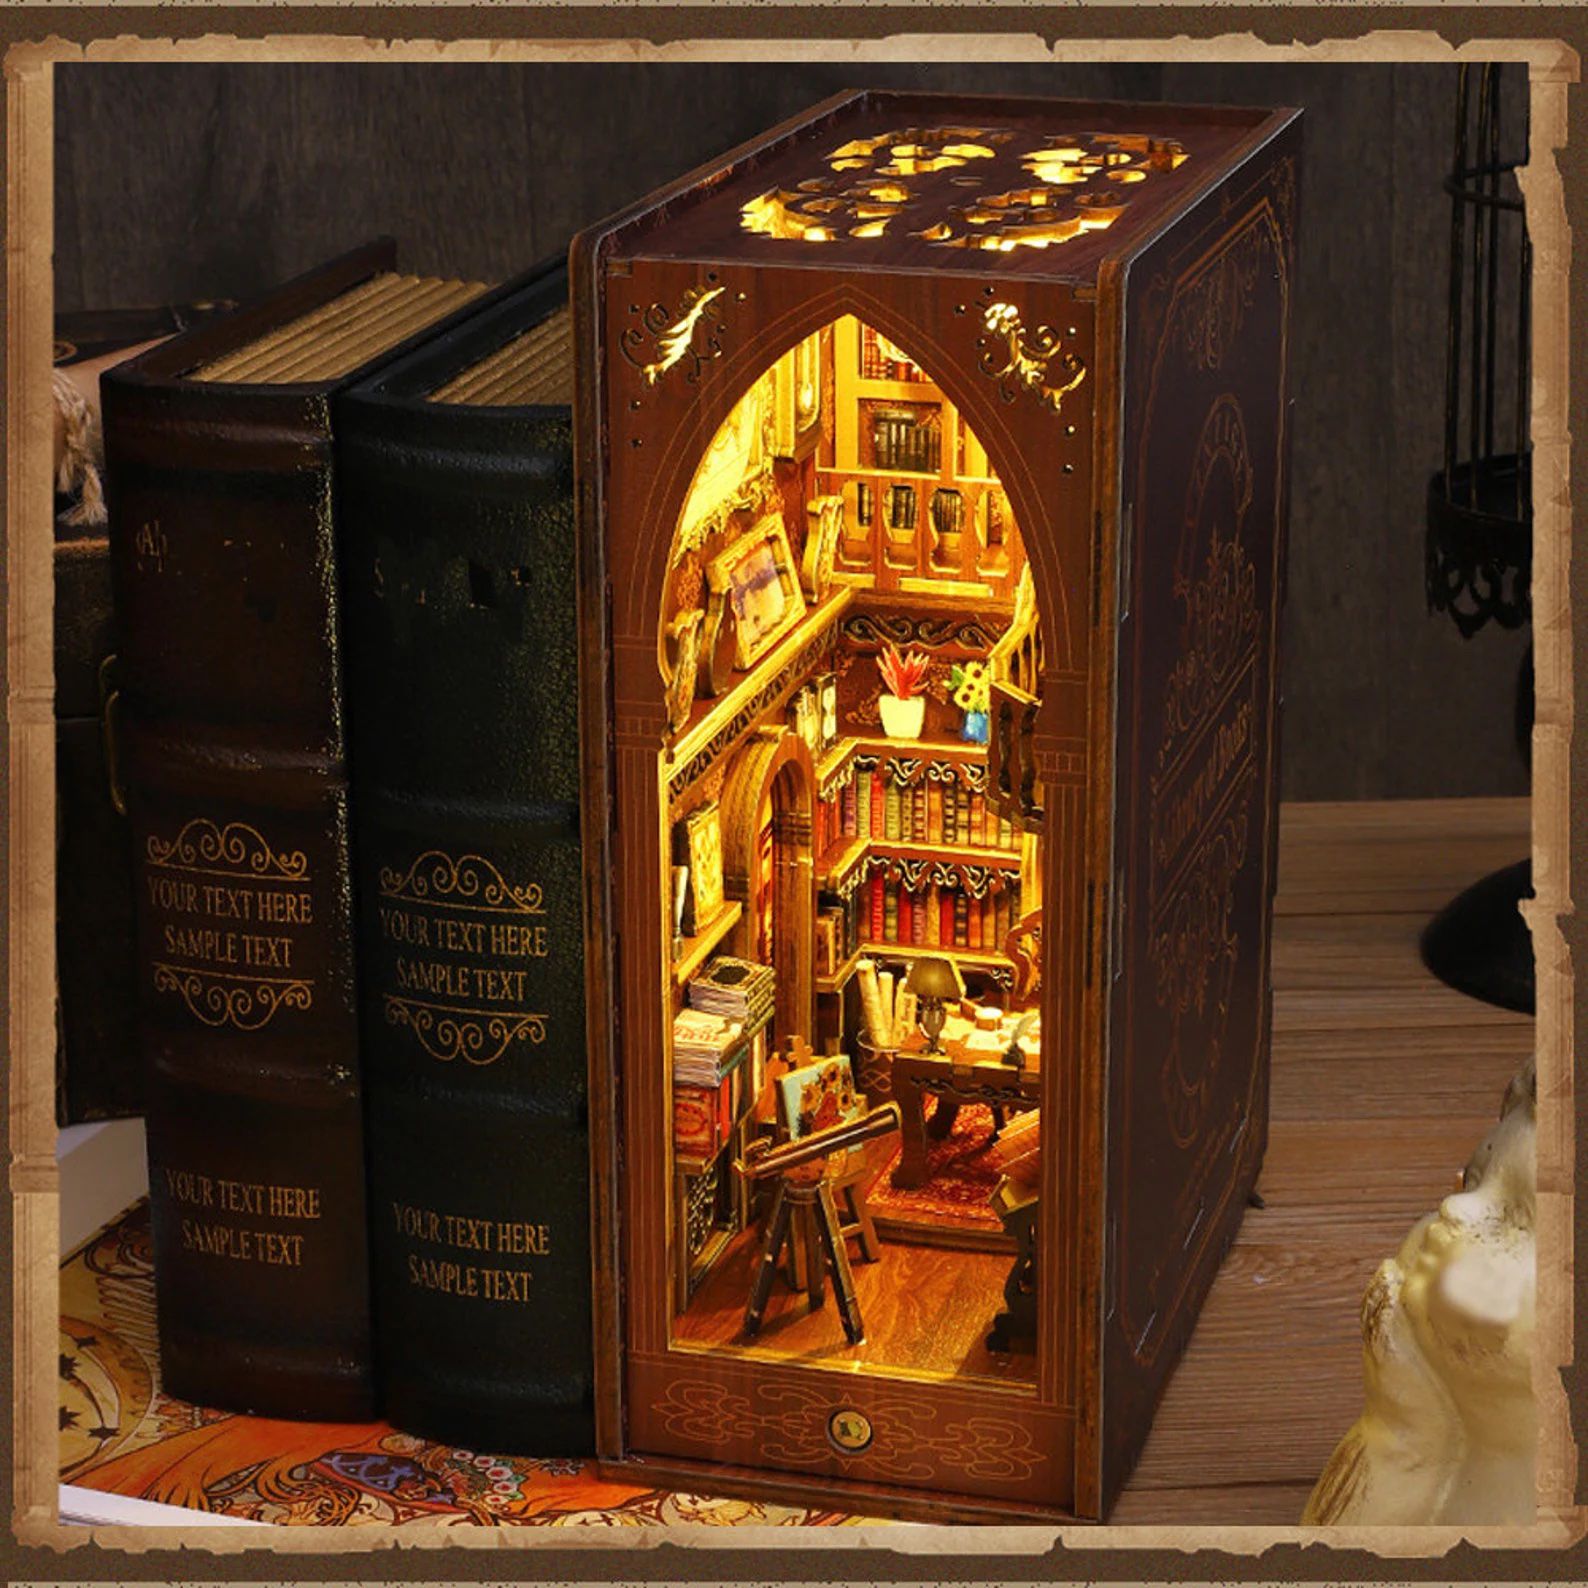 miniature room that fits among books on a bookshelf